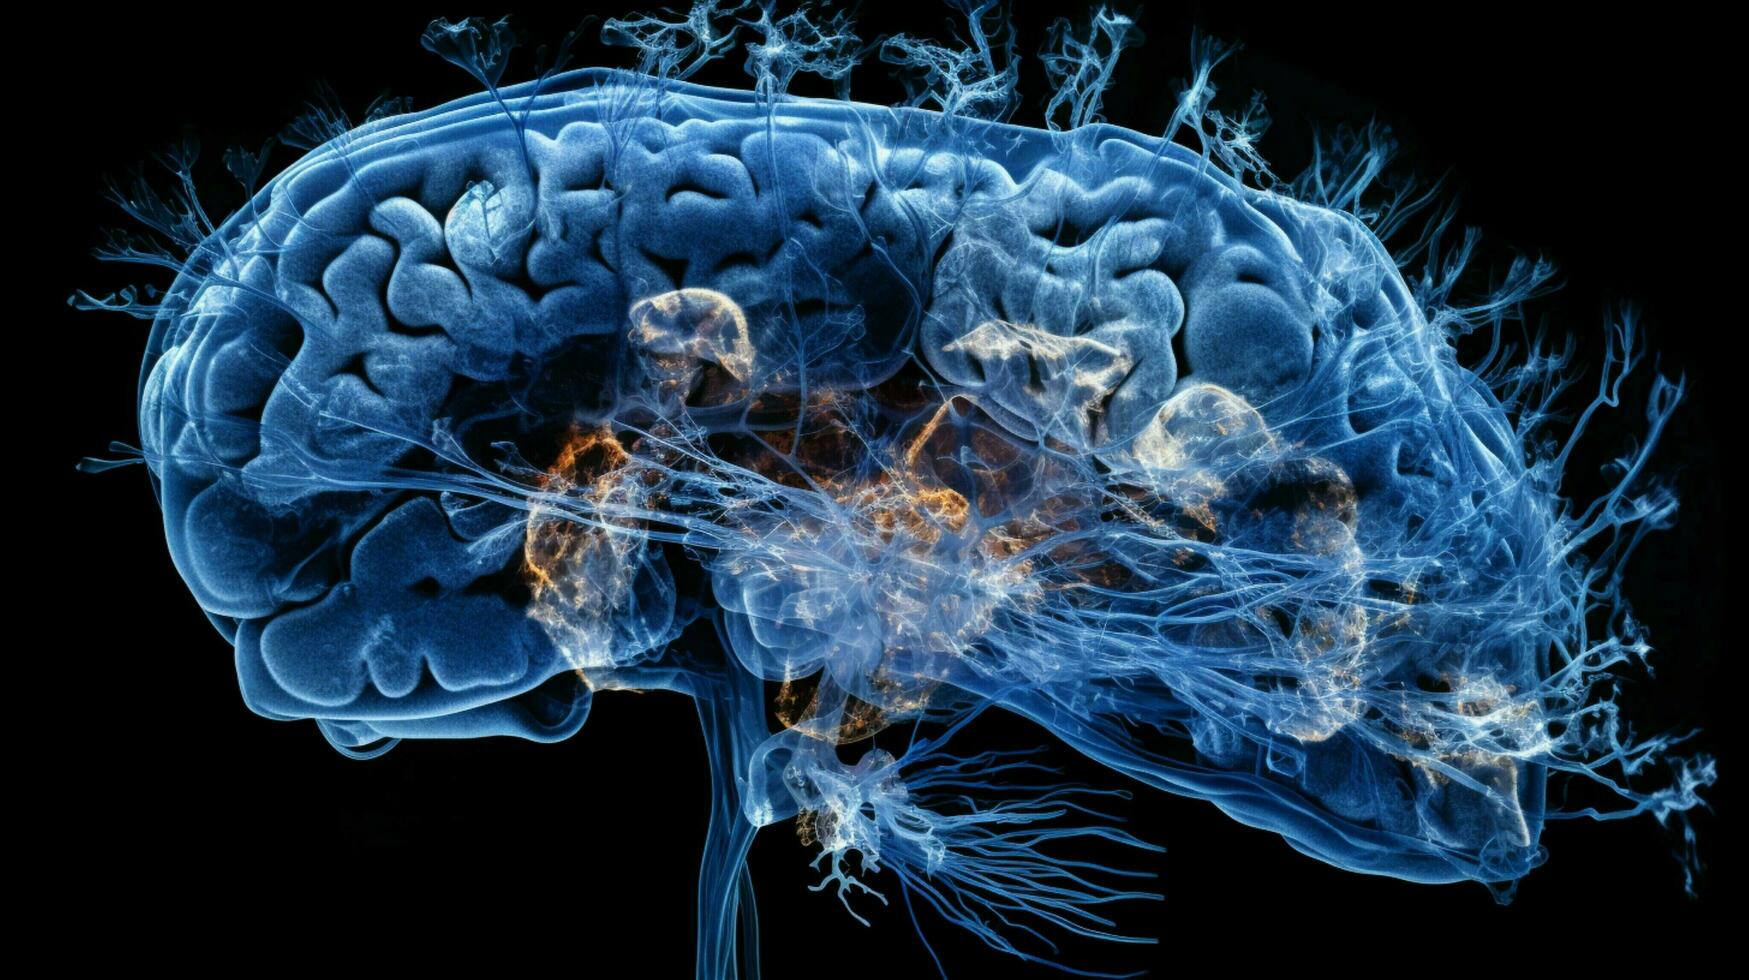 azul tumor revela alzheimer doença dentro humano cérebro foto